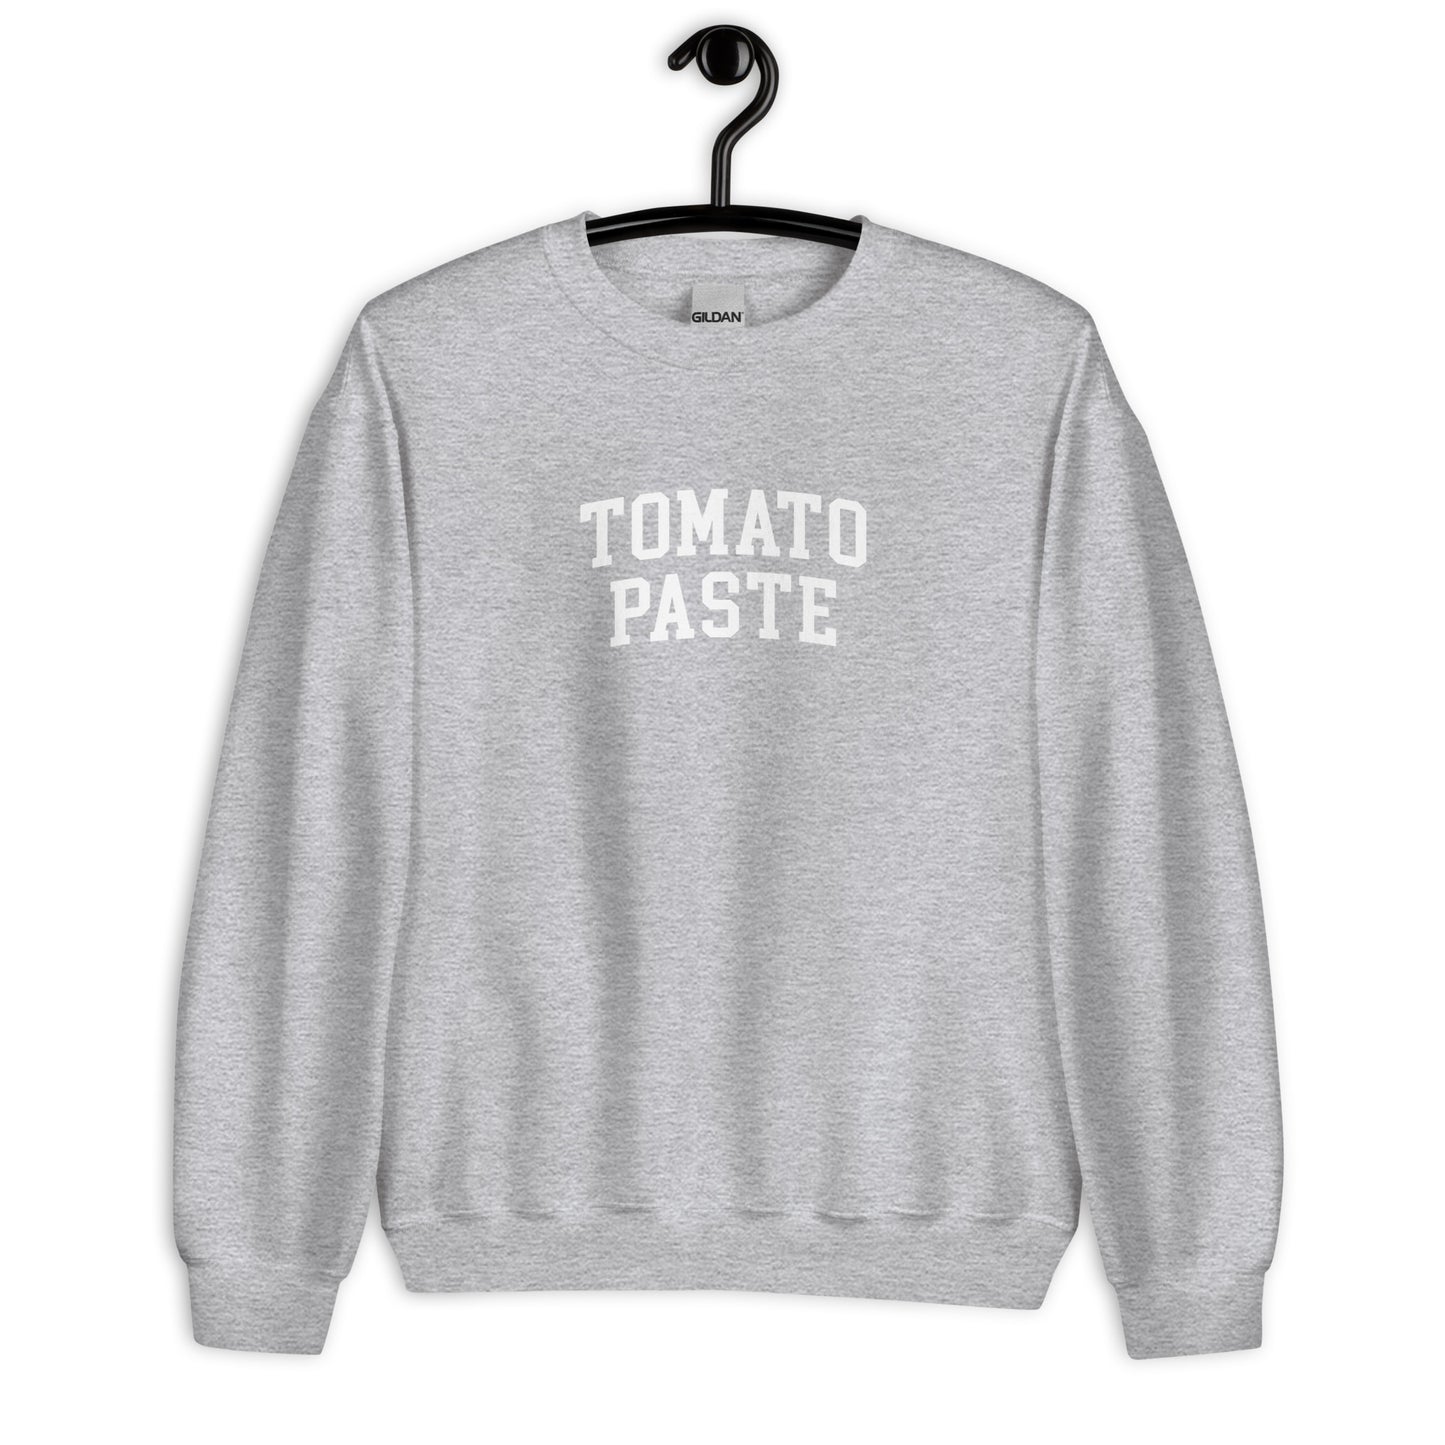 Tomato Paste Sweatshirt - Arched Font